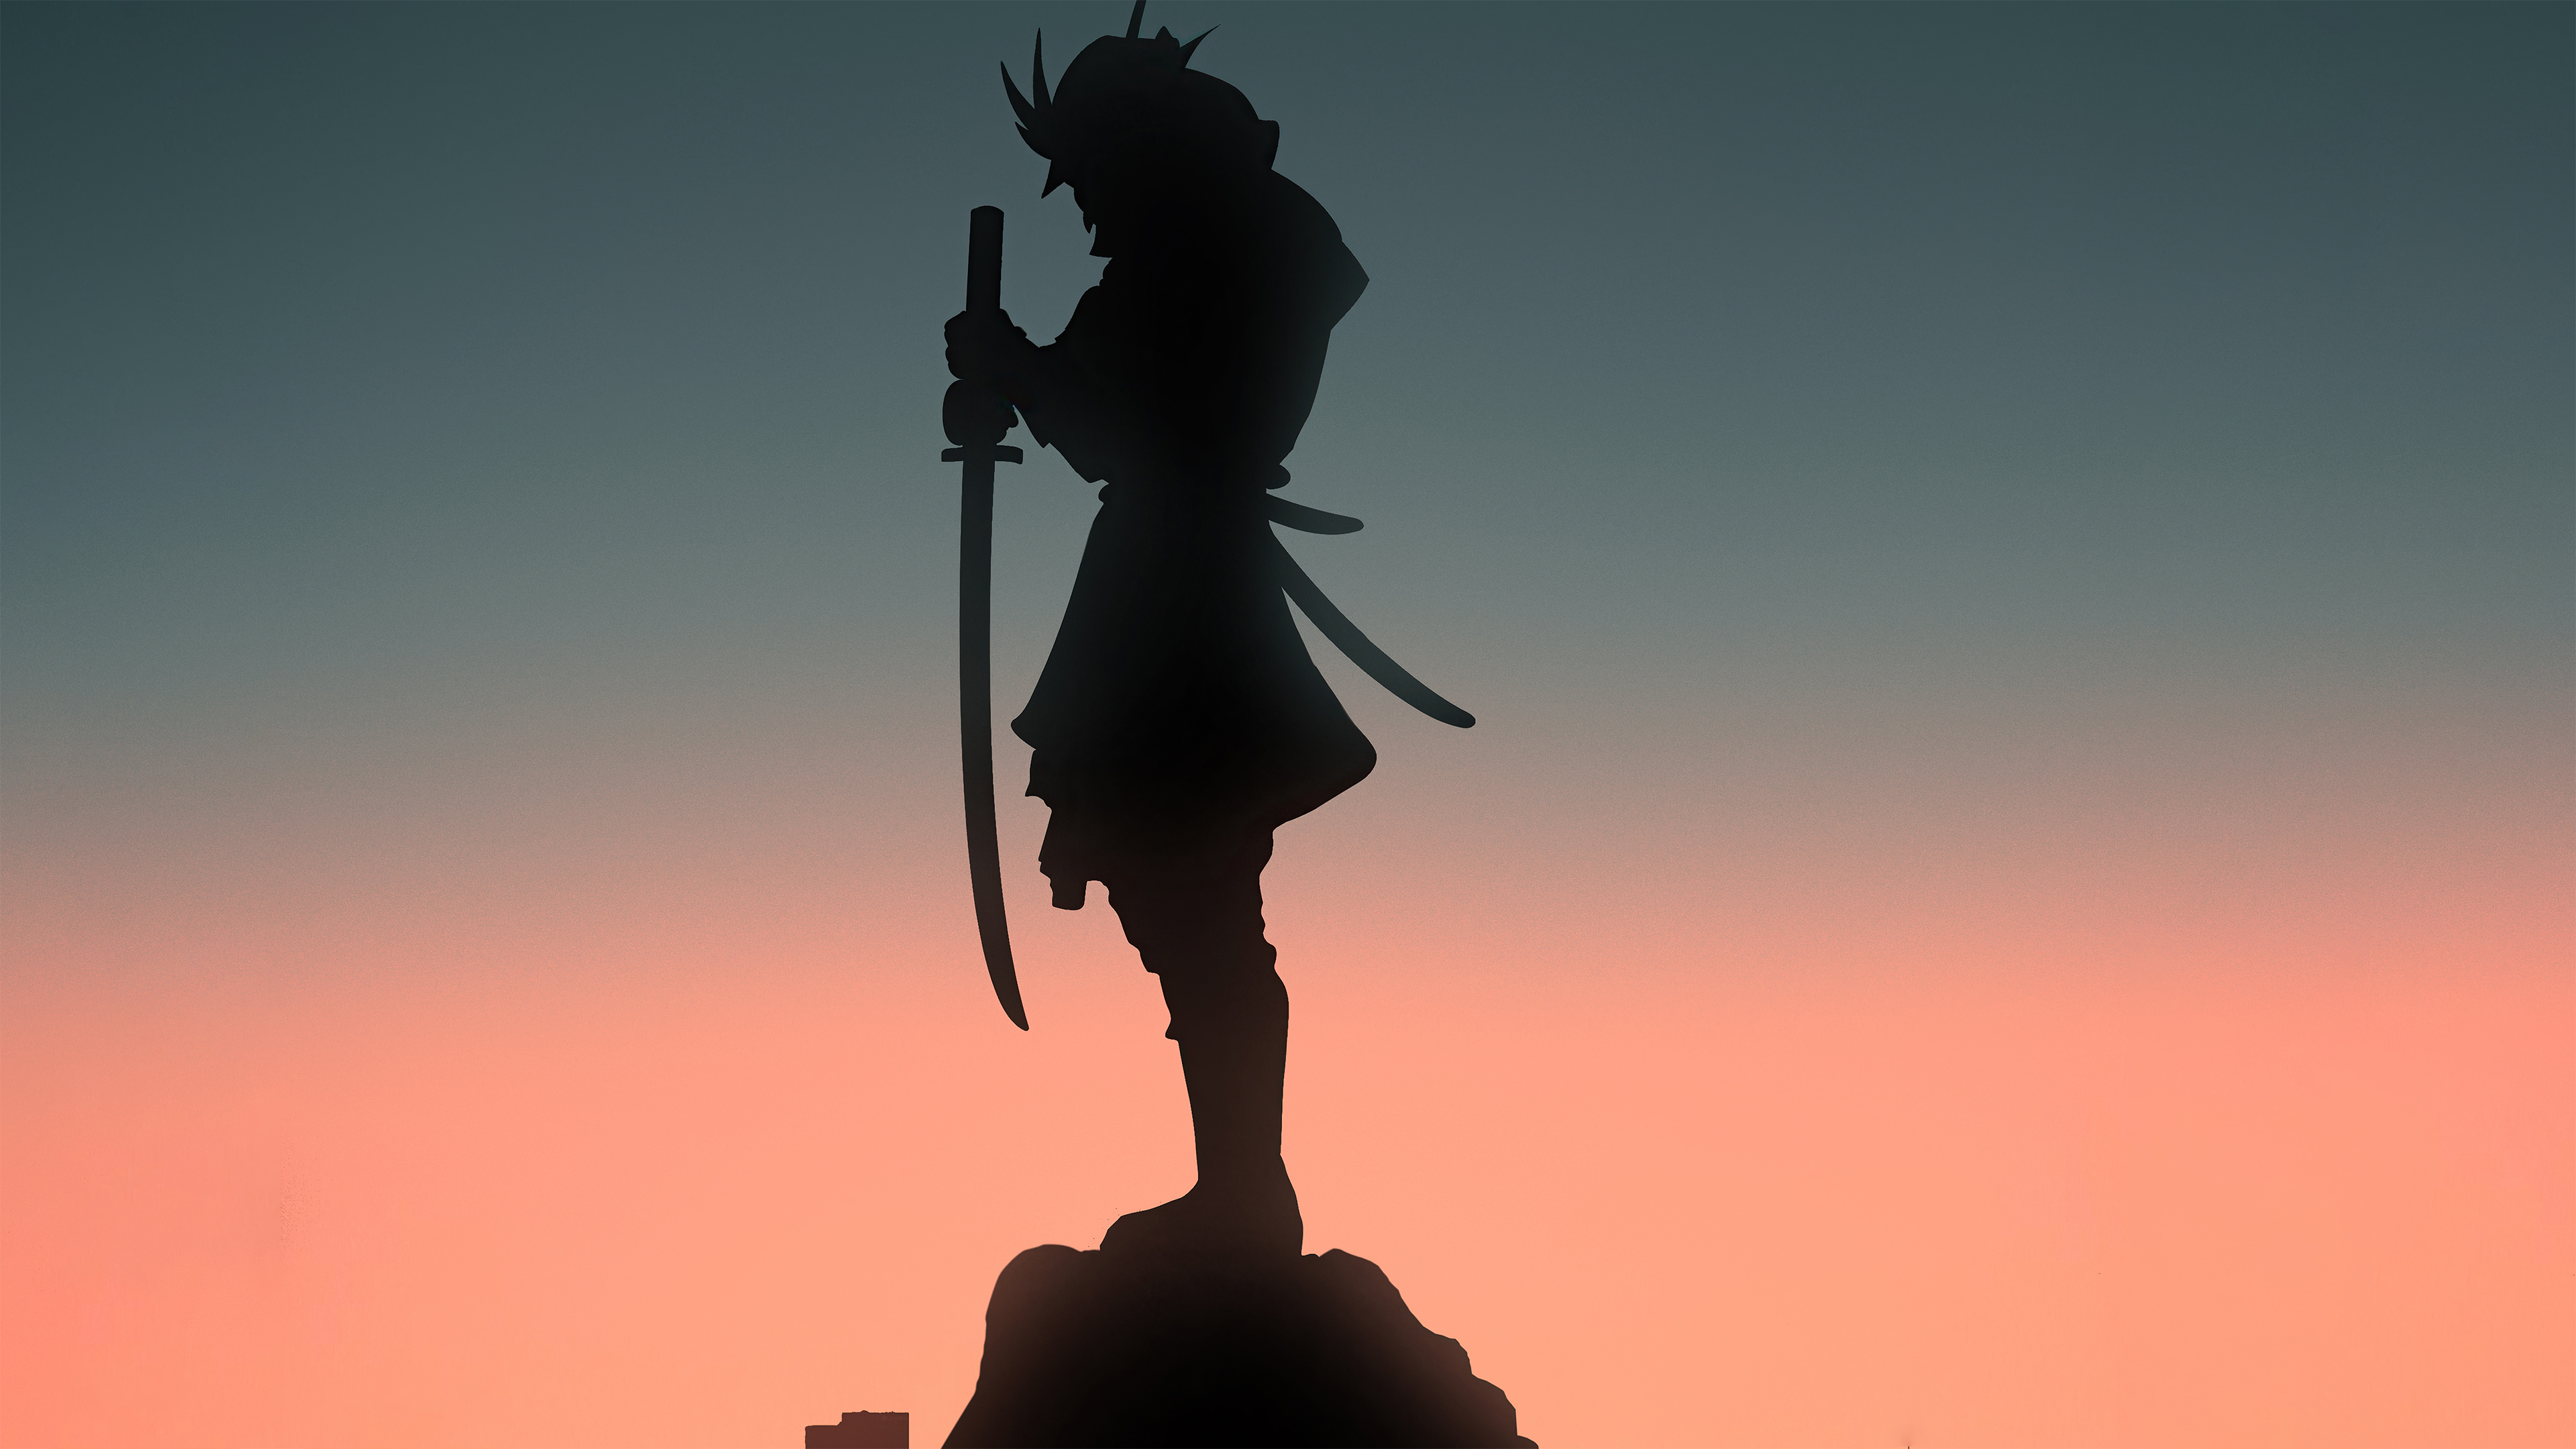 Samurai Ninja With Sword 4k, HD Artist, 4k Wallpaper, Image, Background, Photo and Picture